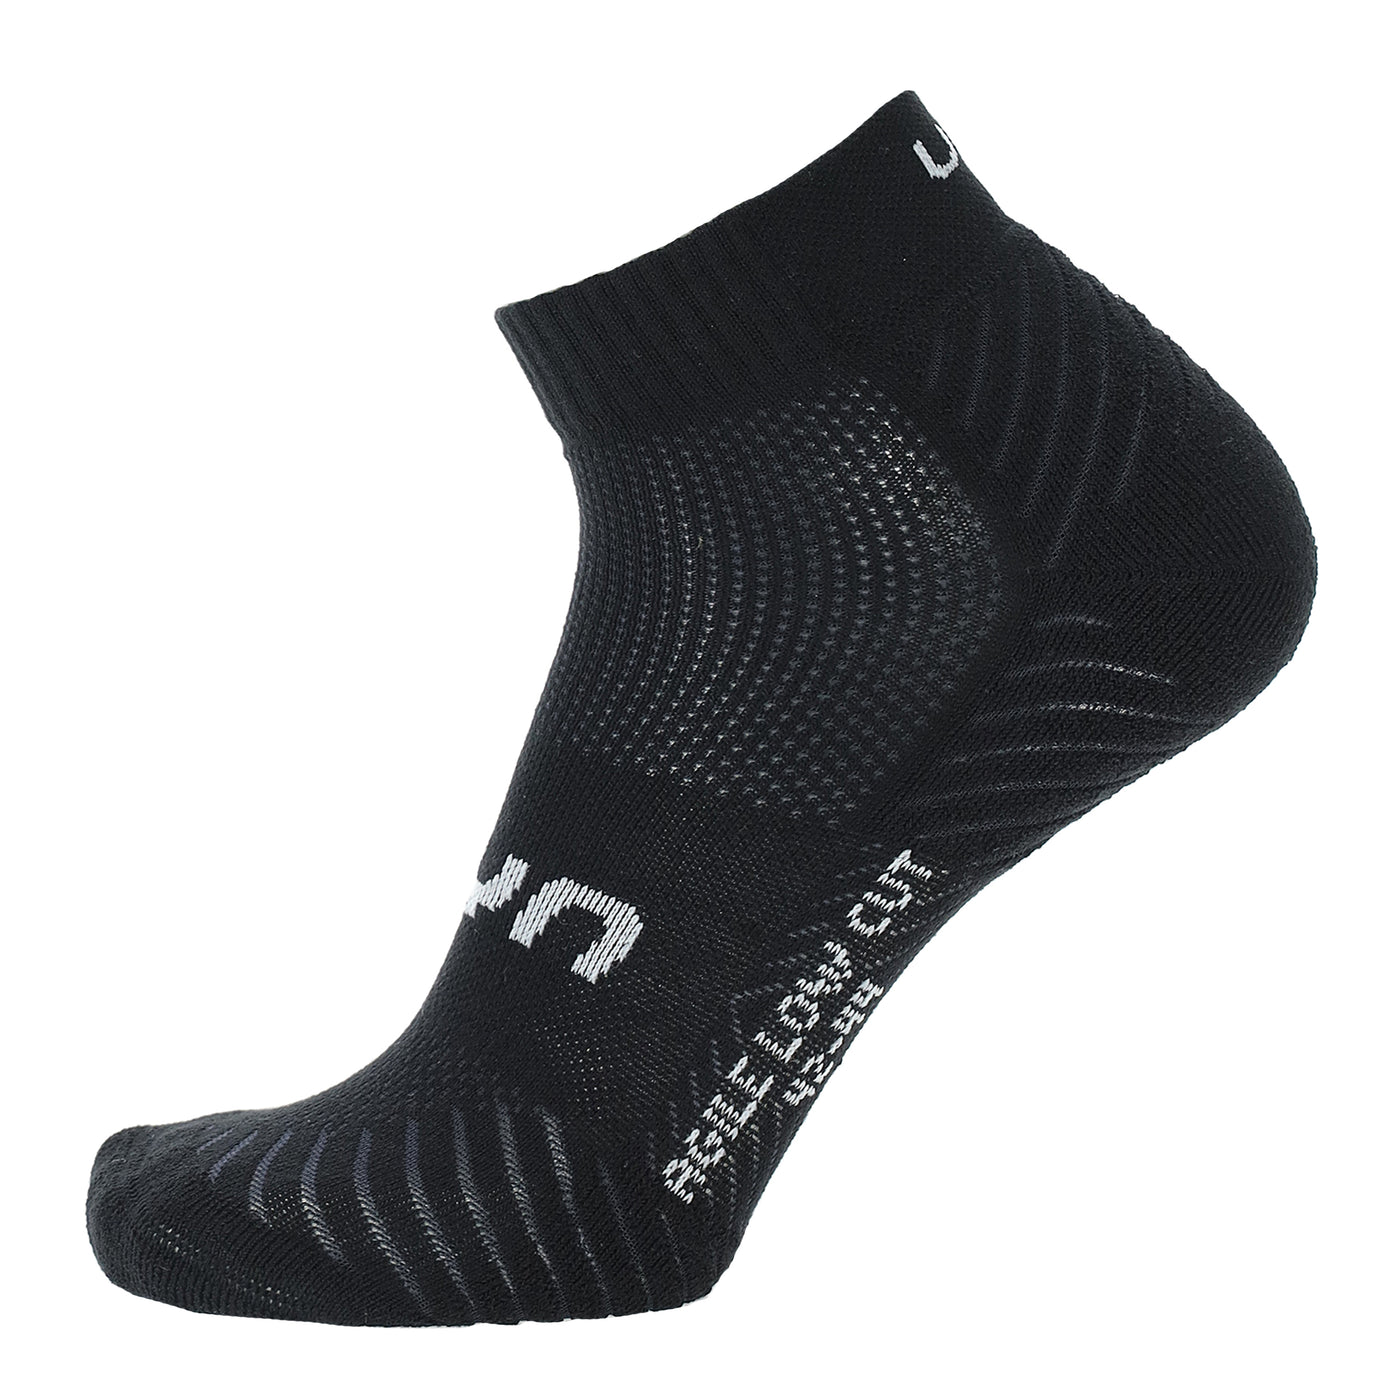 Unisex Agile Low Cut Socks 2Prs Pack